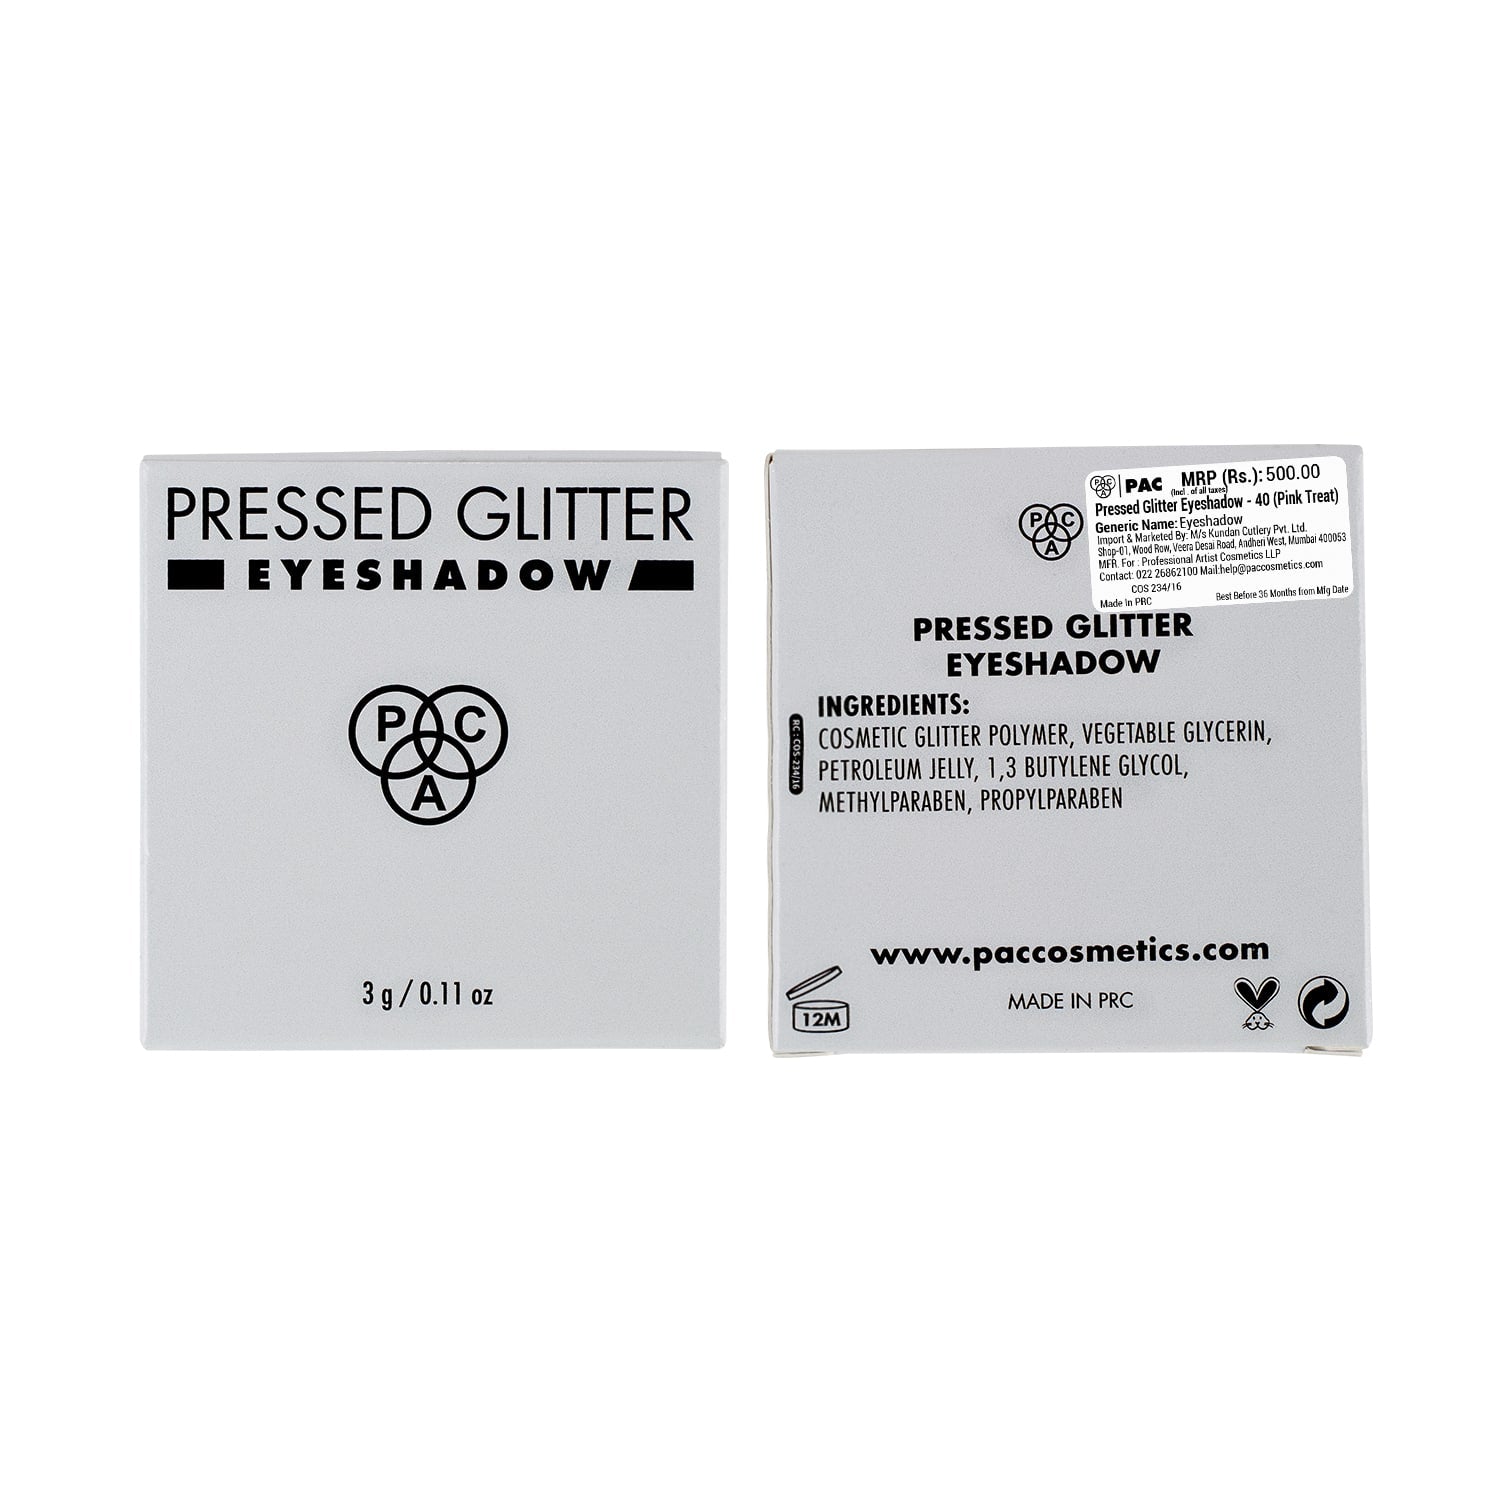 PAC Pressed Glitter Eyeshadow - 40 (Pink Treat) PAC